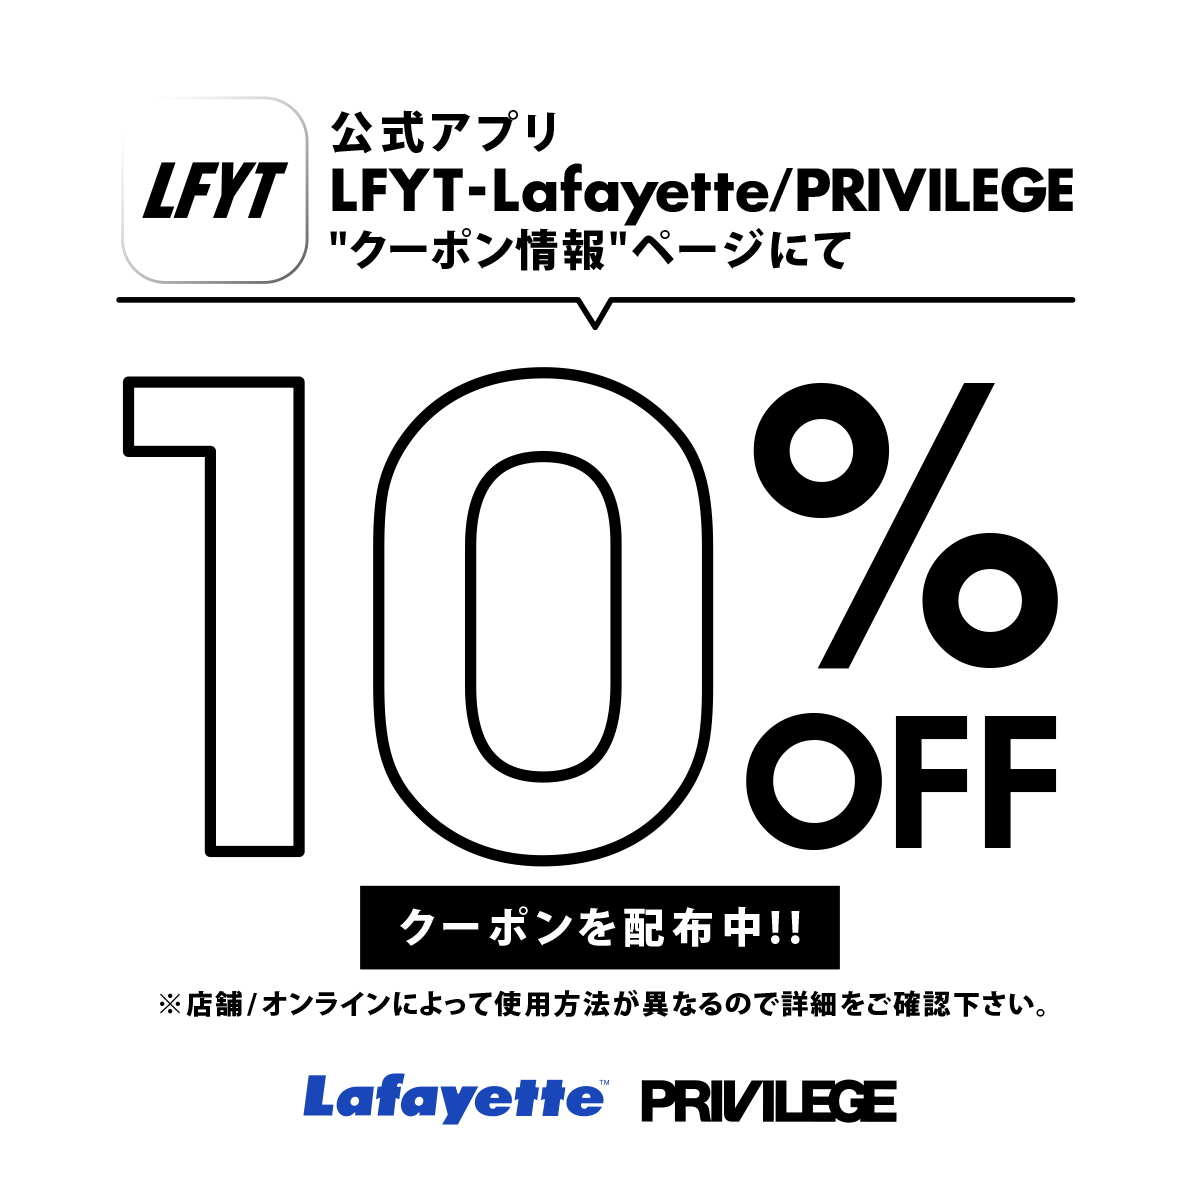 Lfyt App Renewal Campaign 10 Off Coupon Lafayette Blog